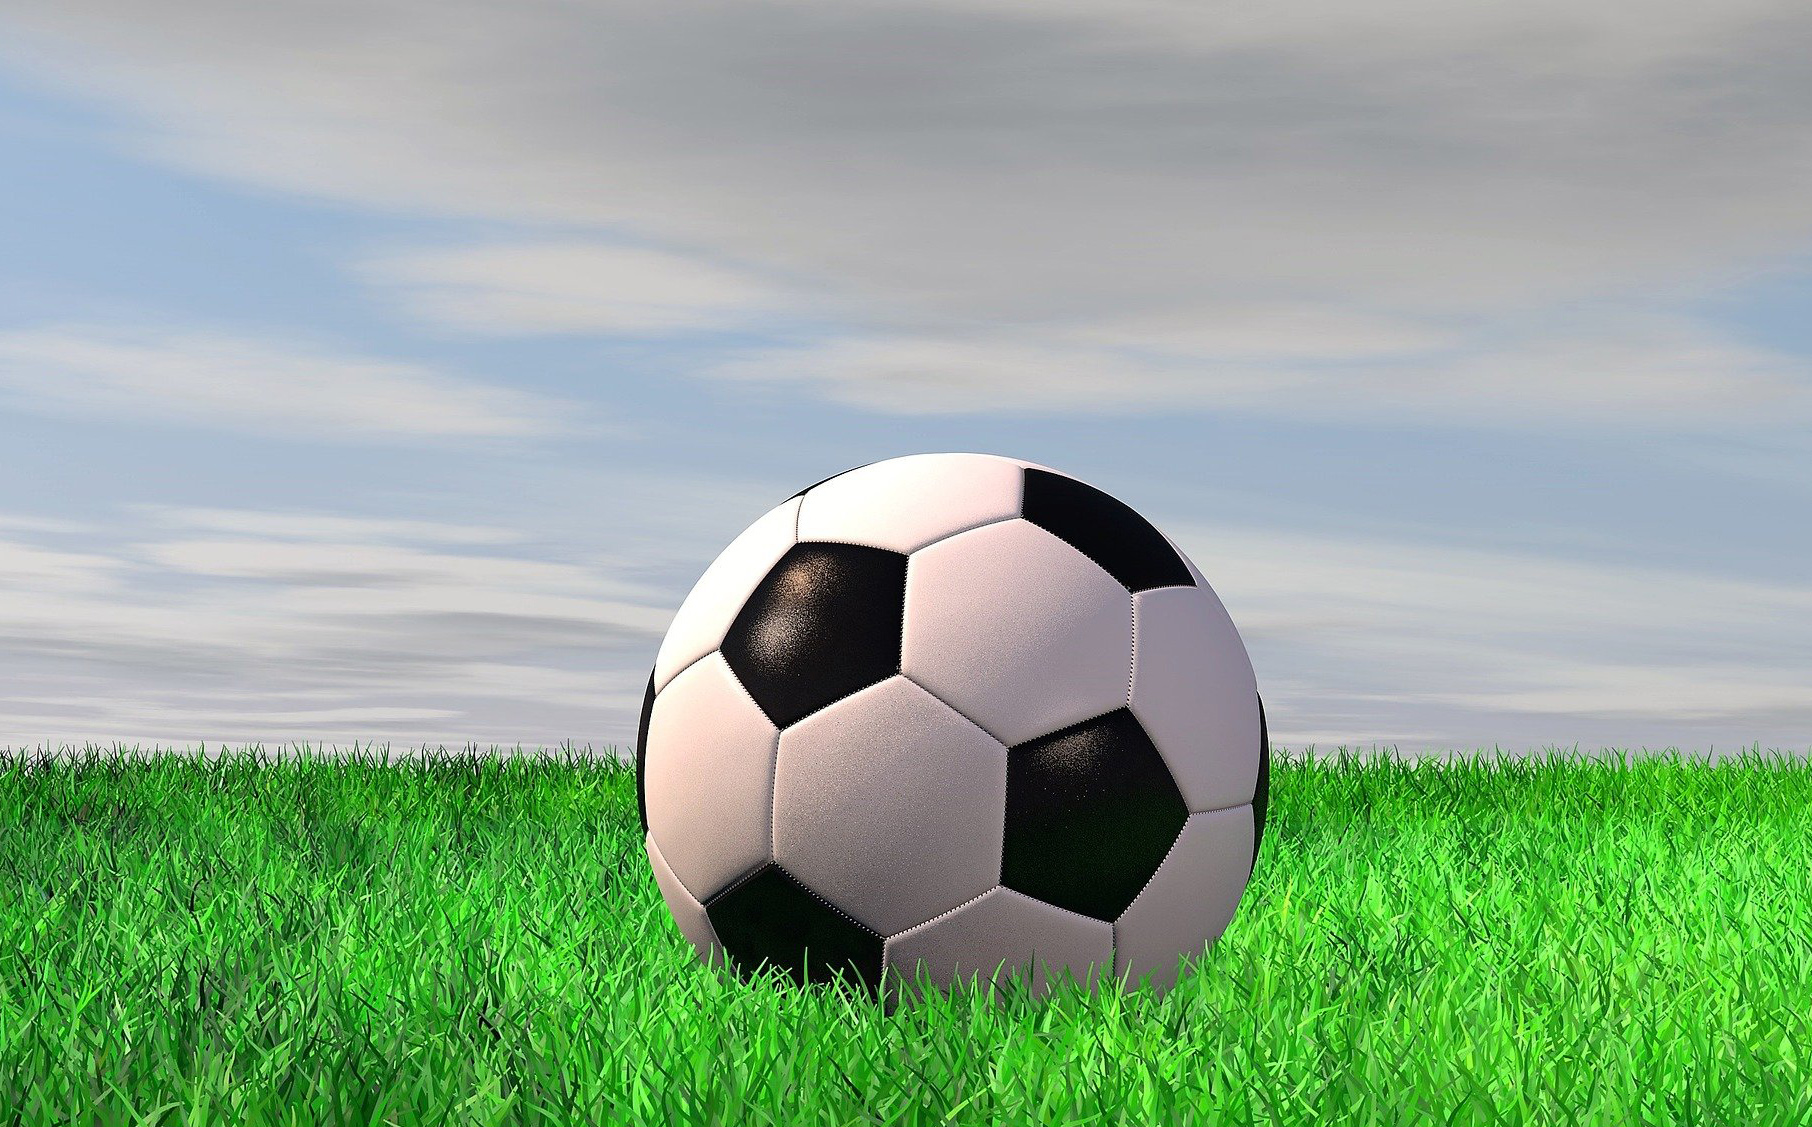 Soccer on grass